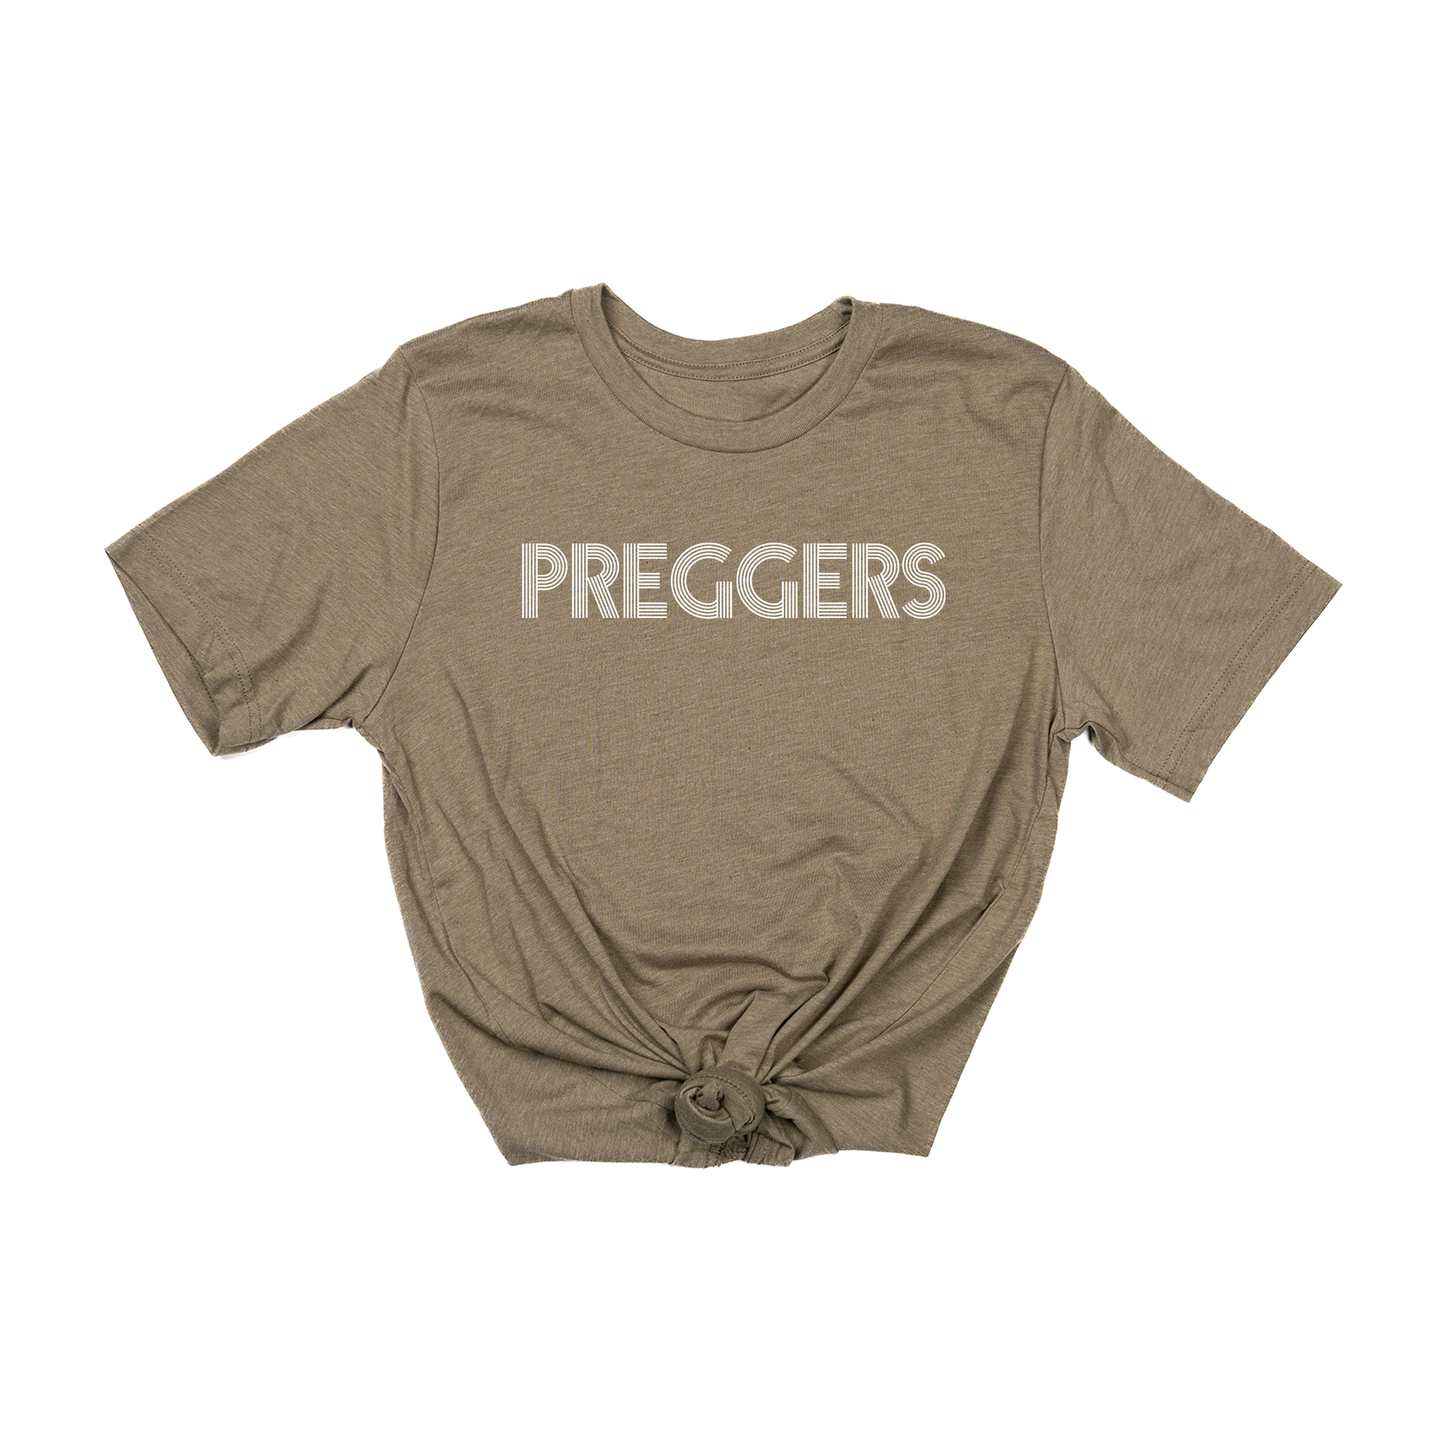 PREGGERS (White) - Tee (Olive)